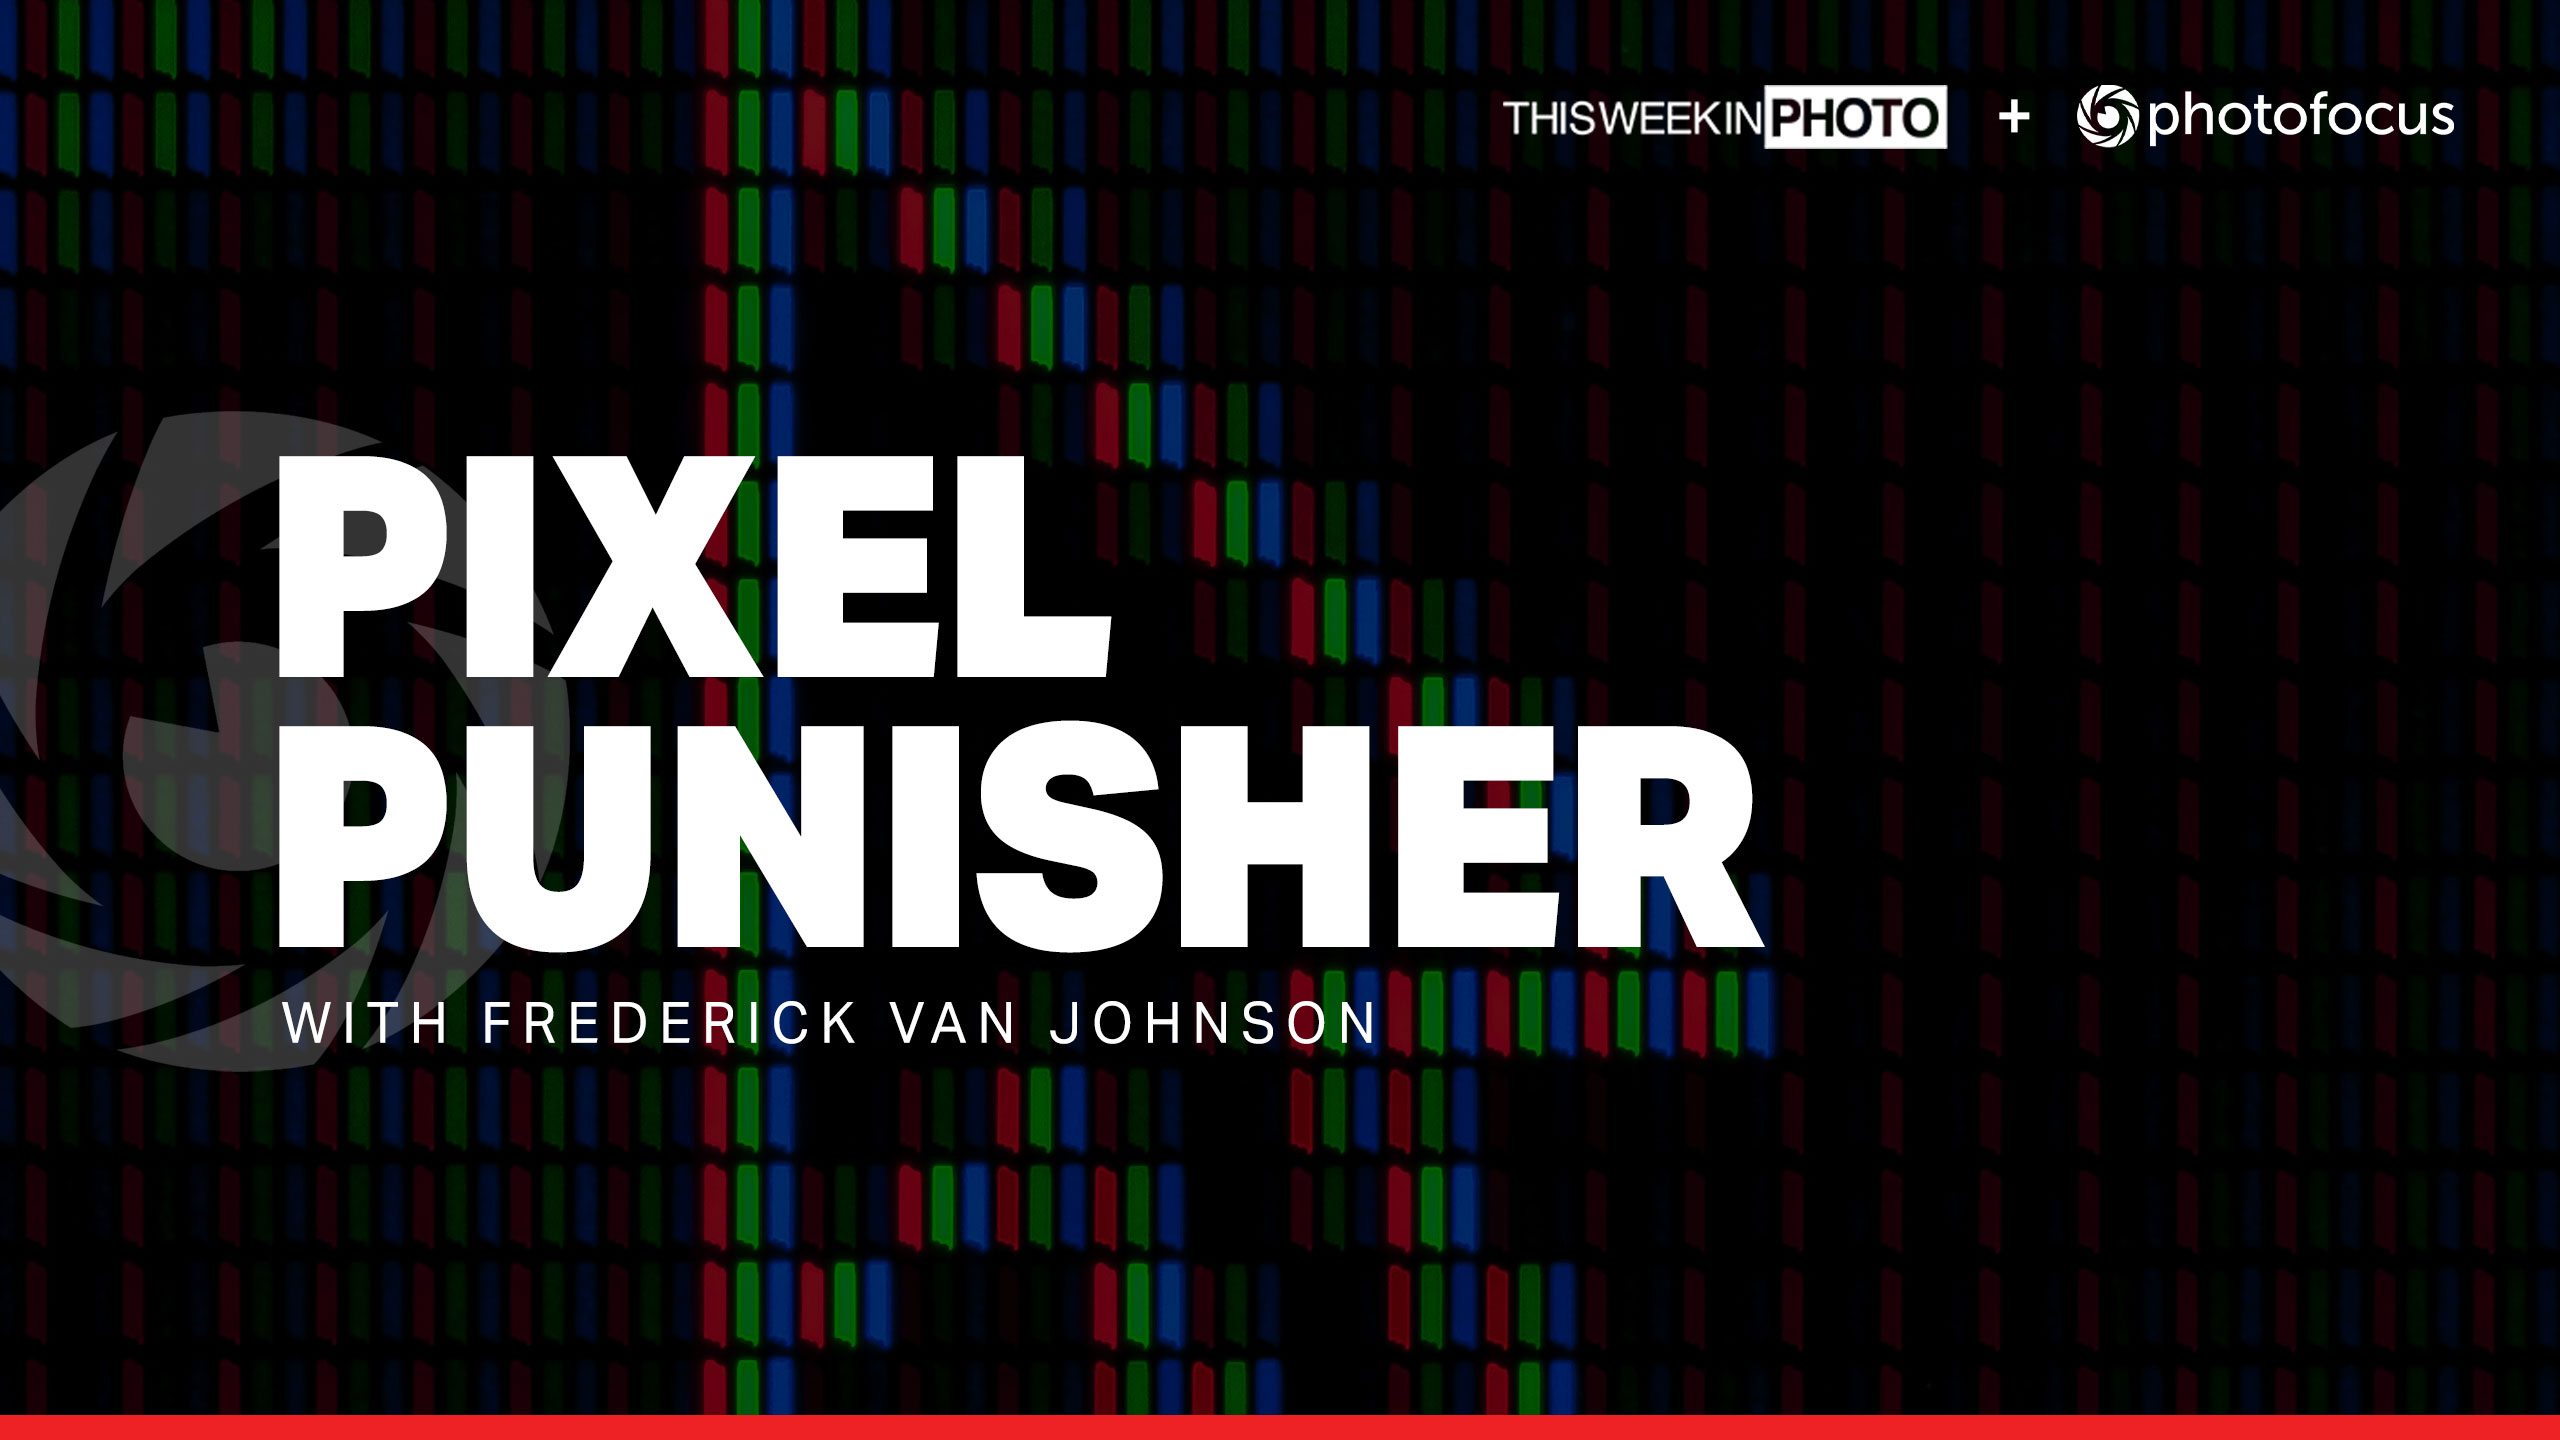 pixel-punisher-twip